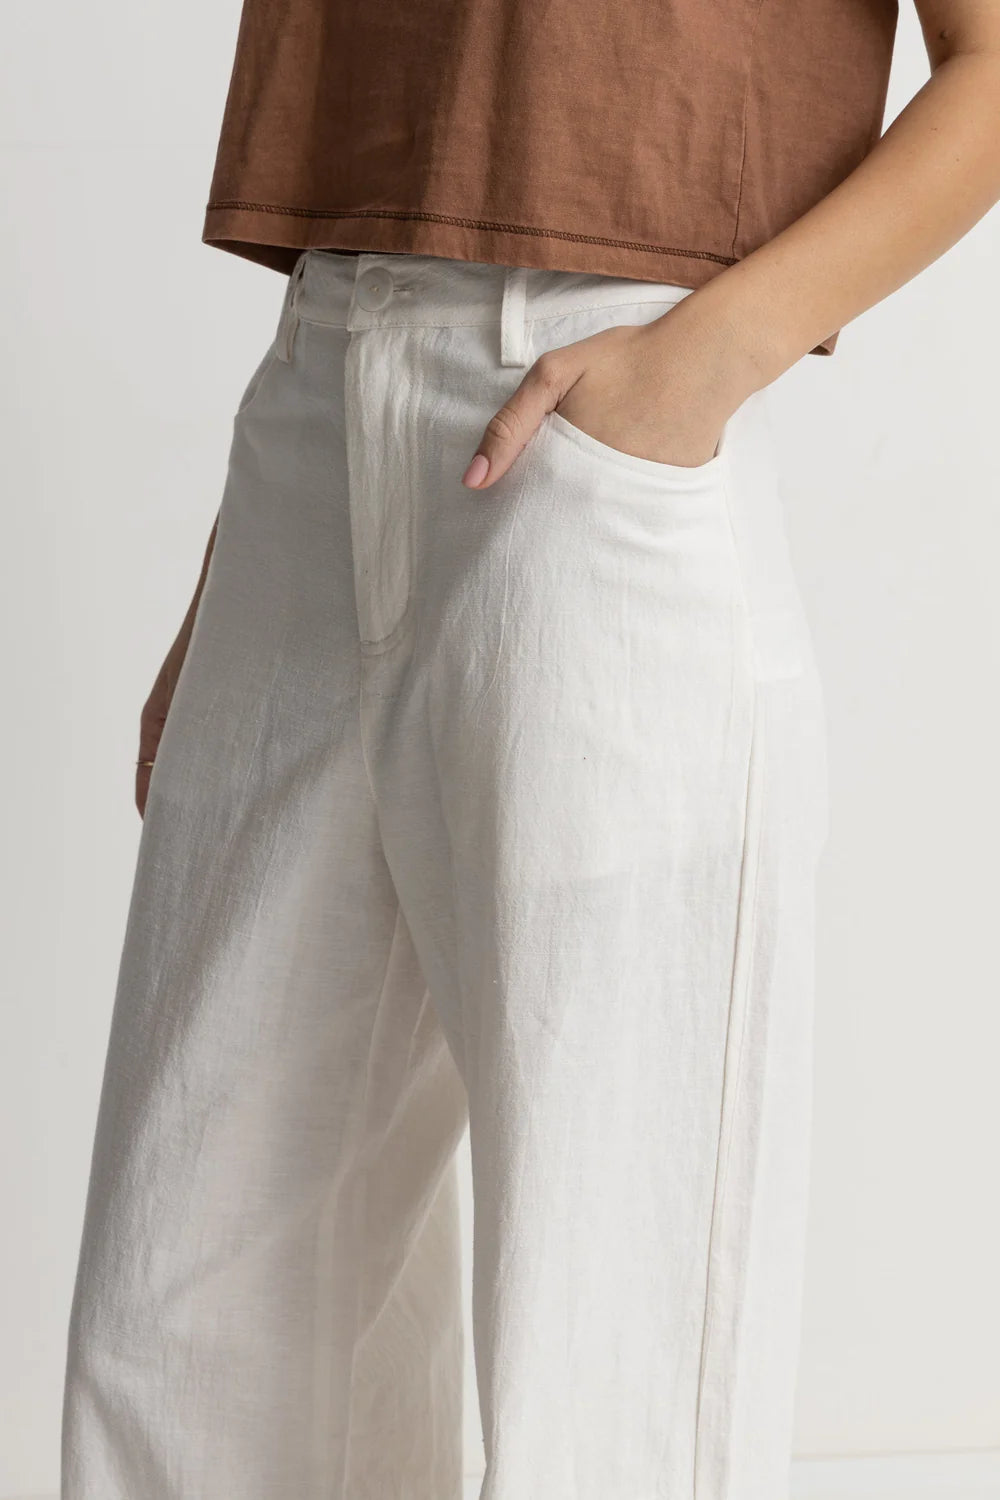 women's white linen cotton pants 